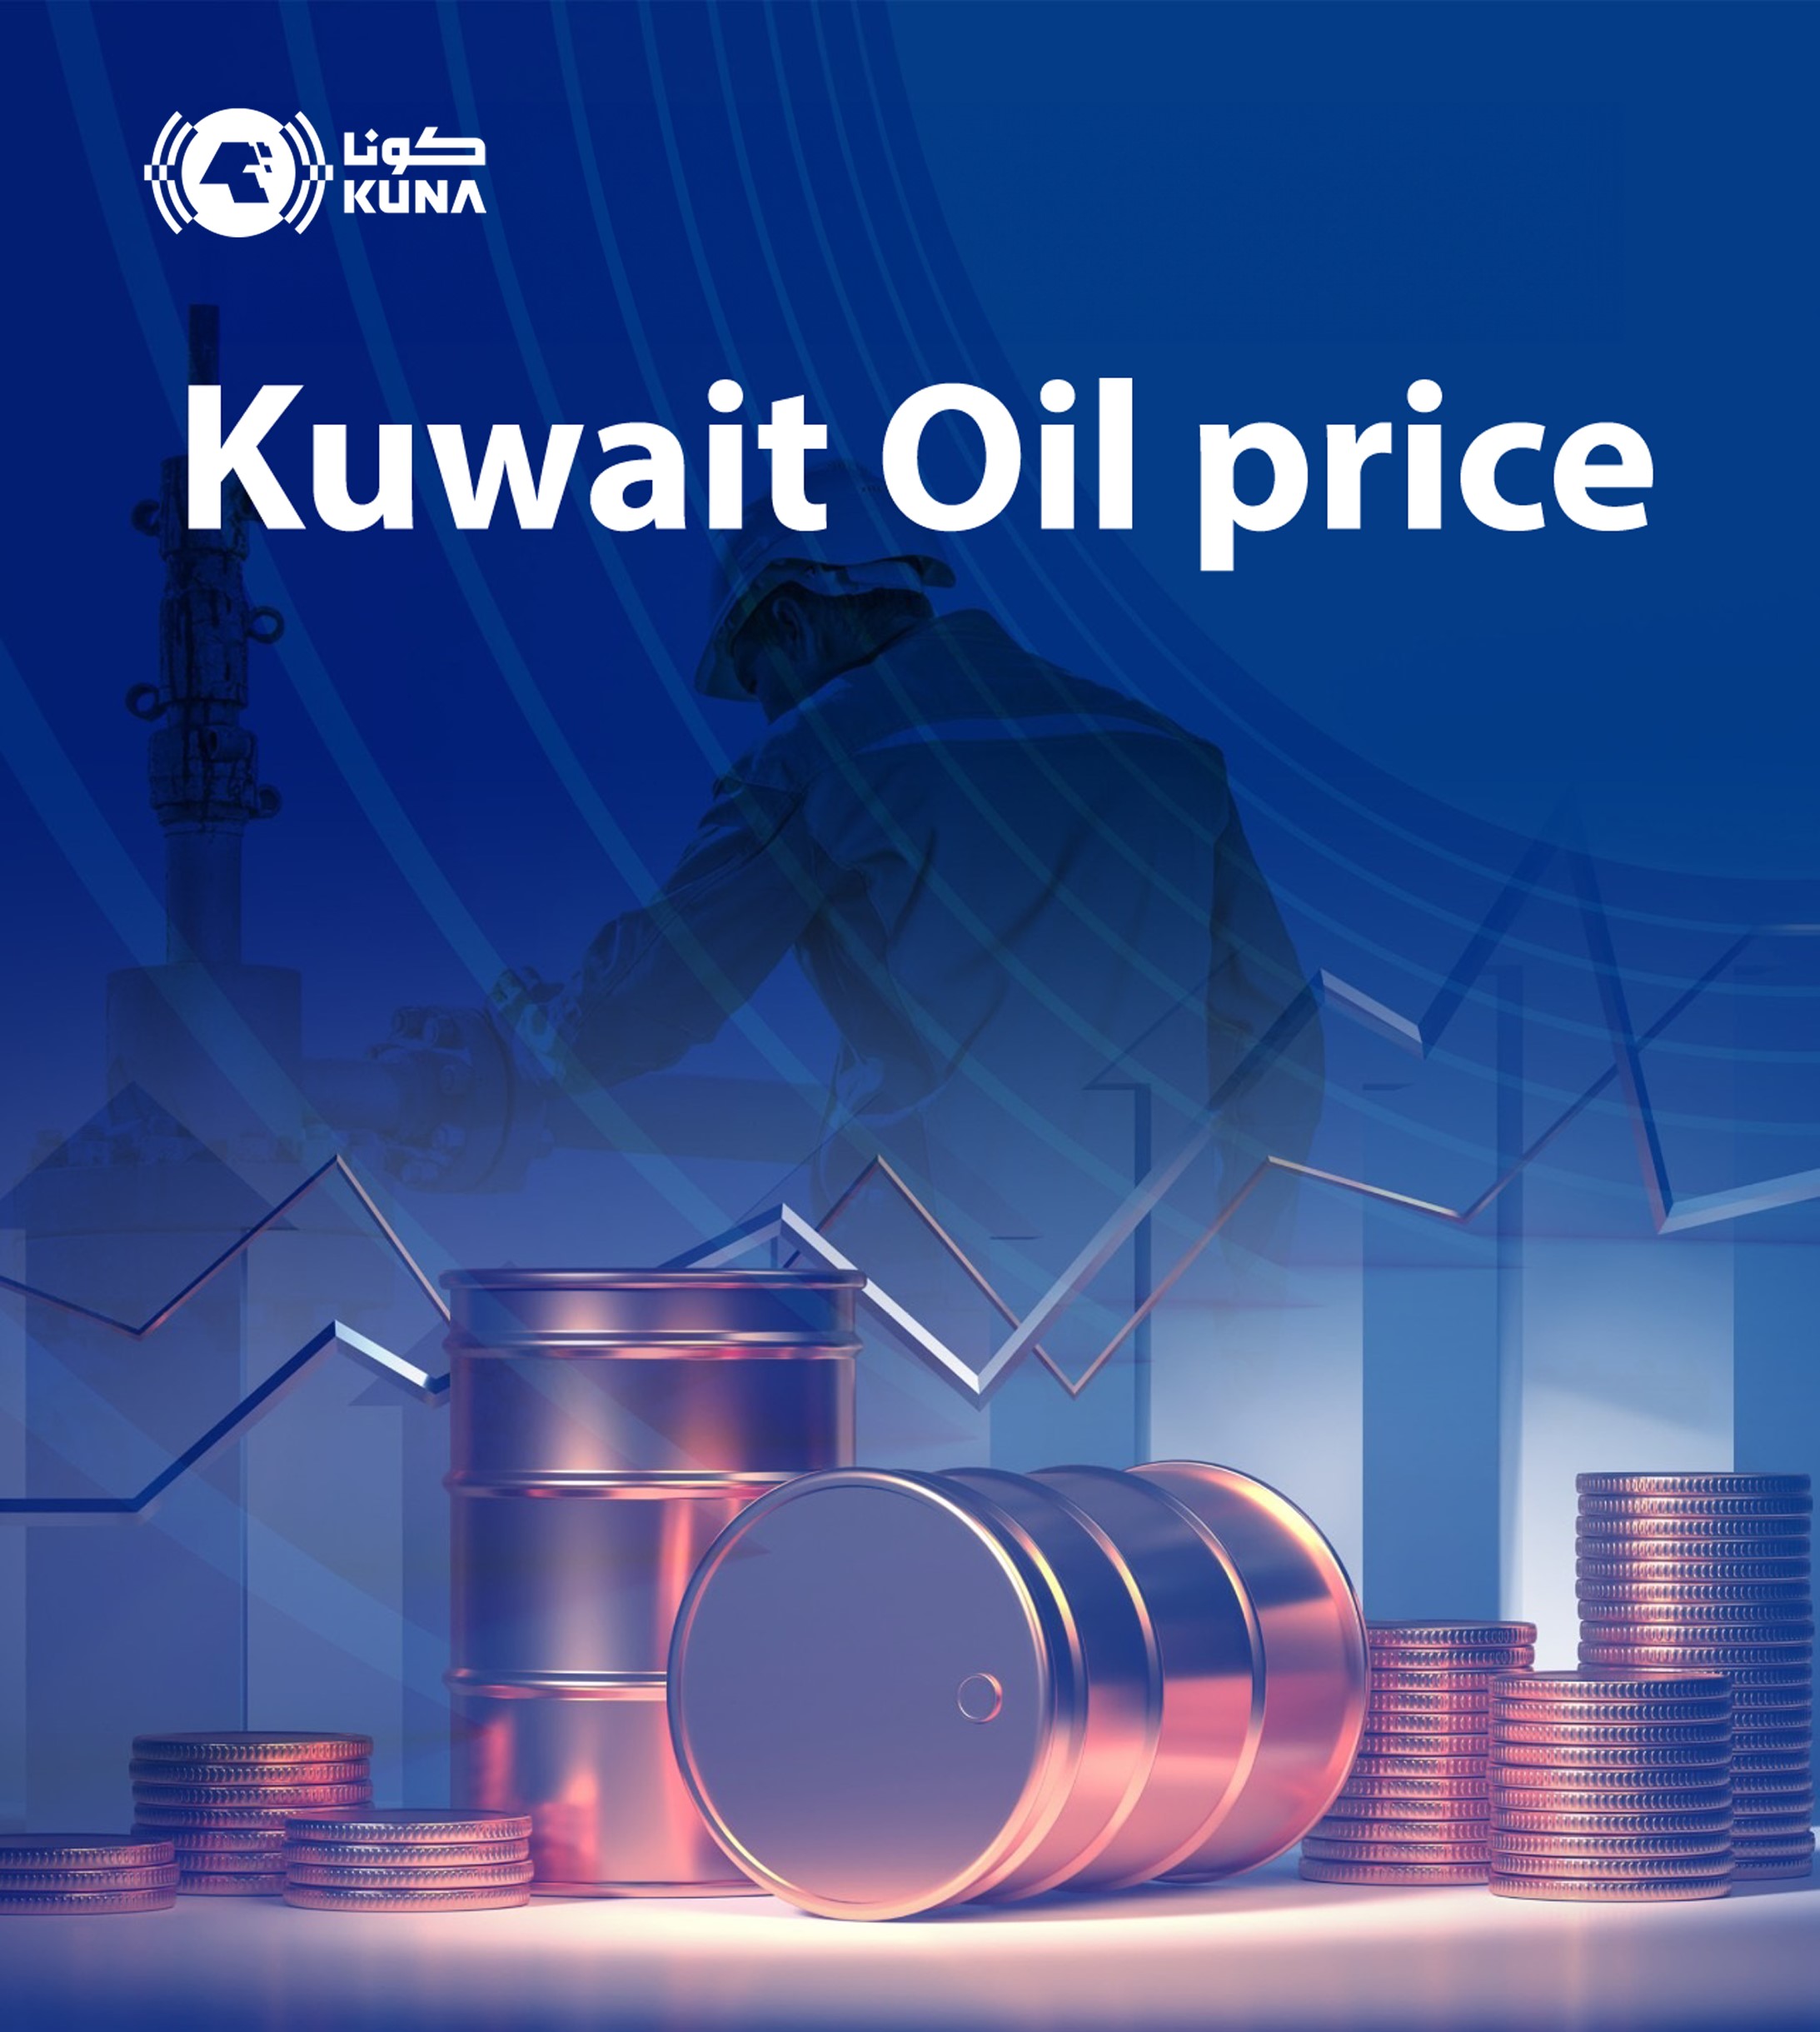 Kuwait oil price rises to USD 86.32 pb -- KPC                                                                                                                                                                                                             